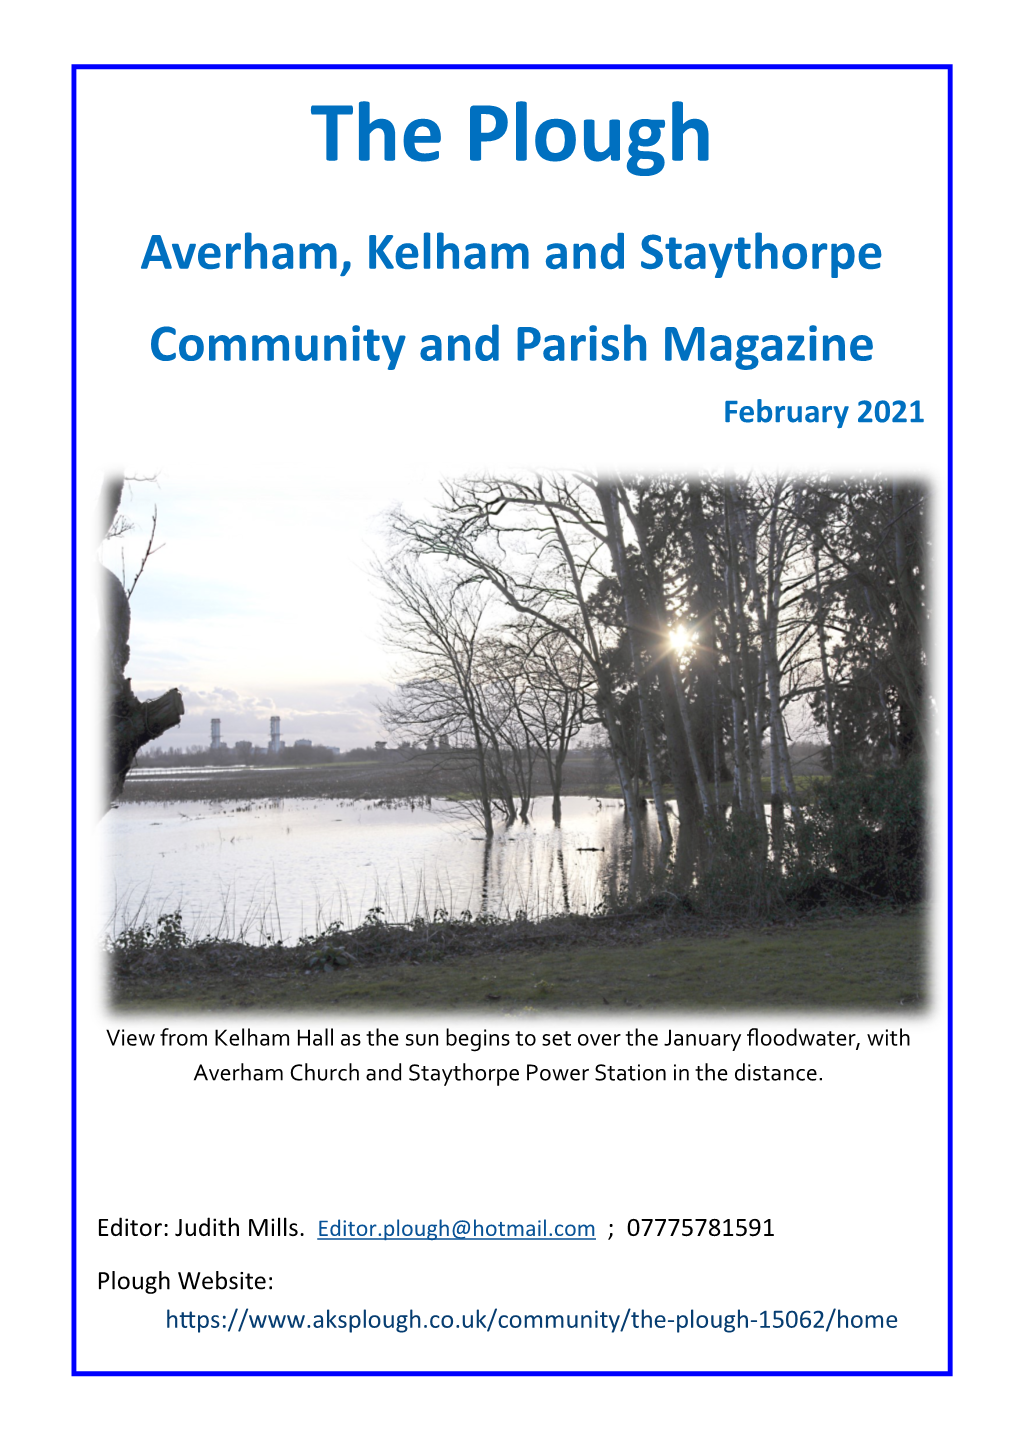 The Plough Averham, Kelham and Staythorpe Community and Parish Magazine February 2021